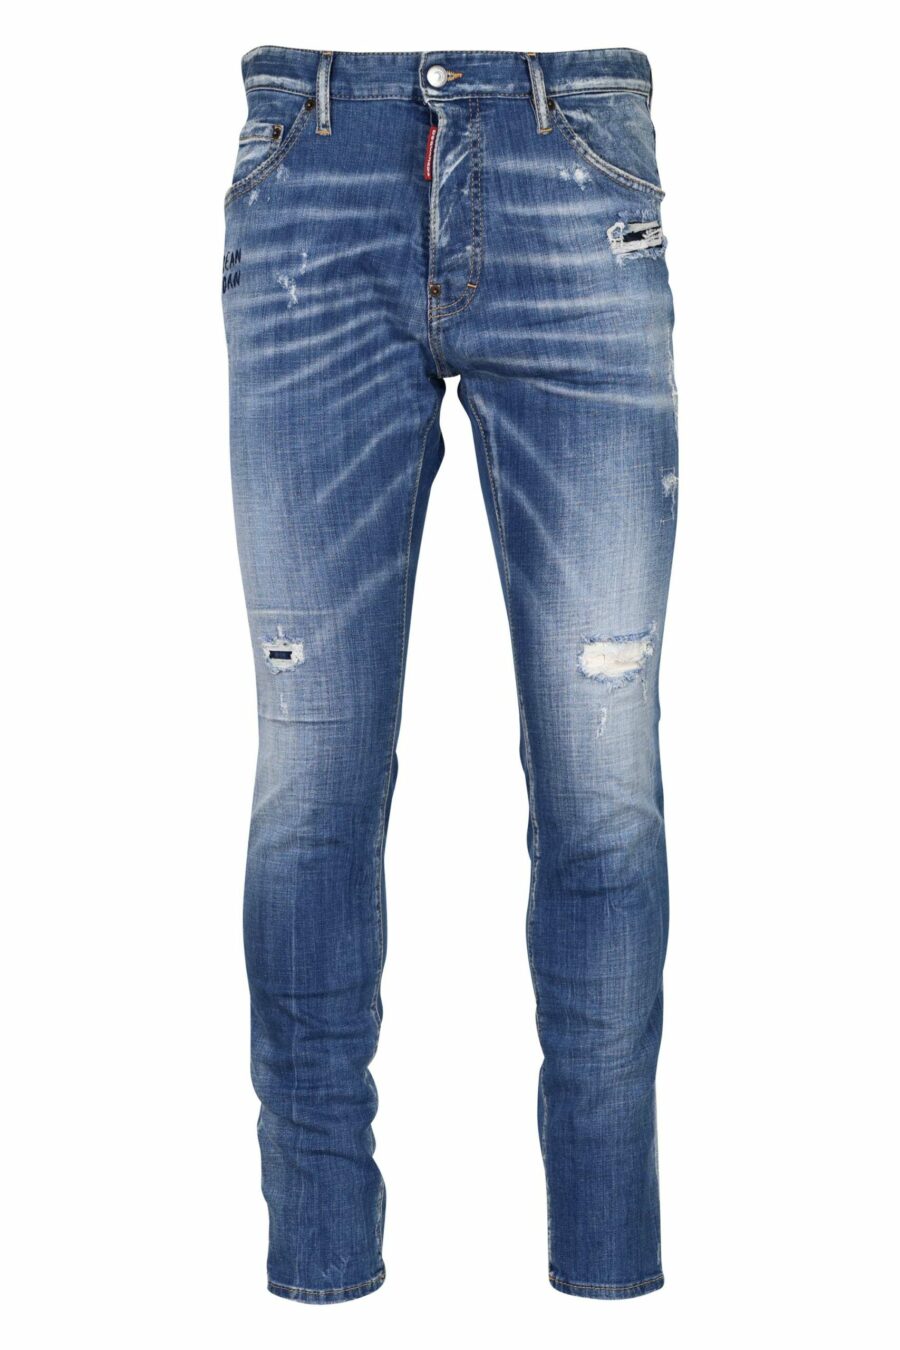 Pantalon bleu clair "cool guy jean" semi-fendu et semi-usé - 8054148311414 scaled